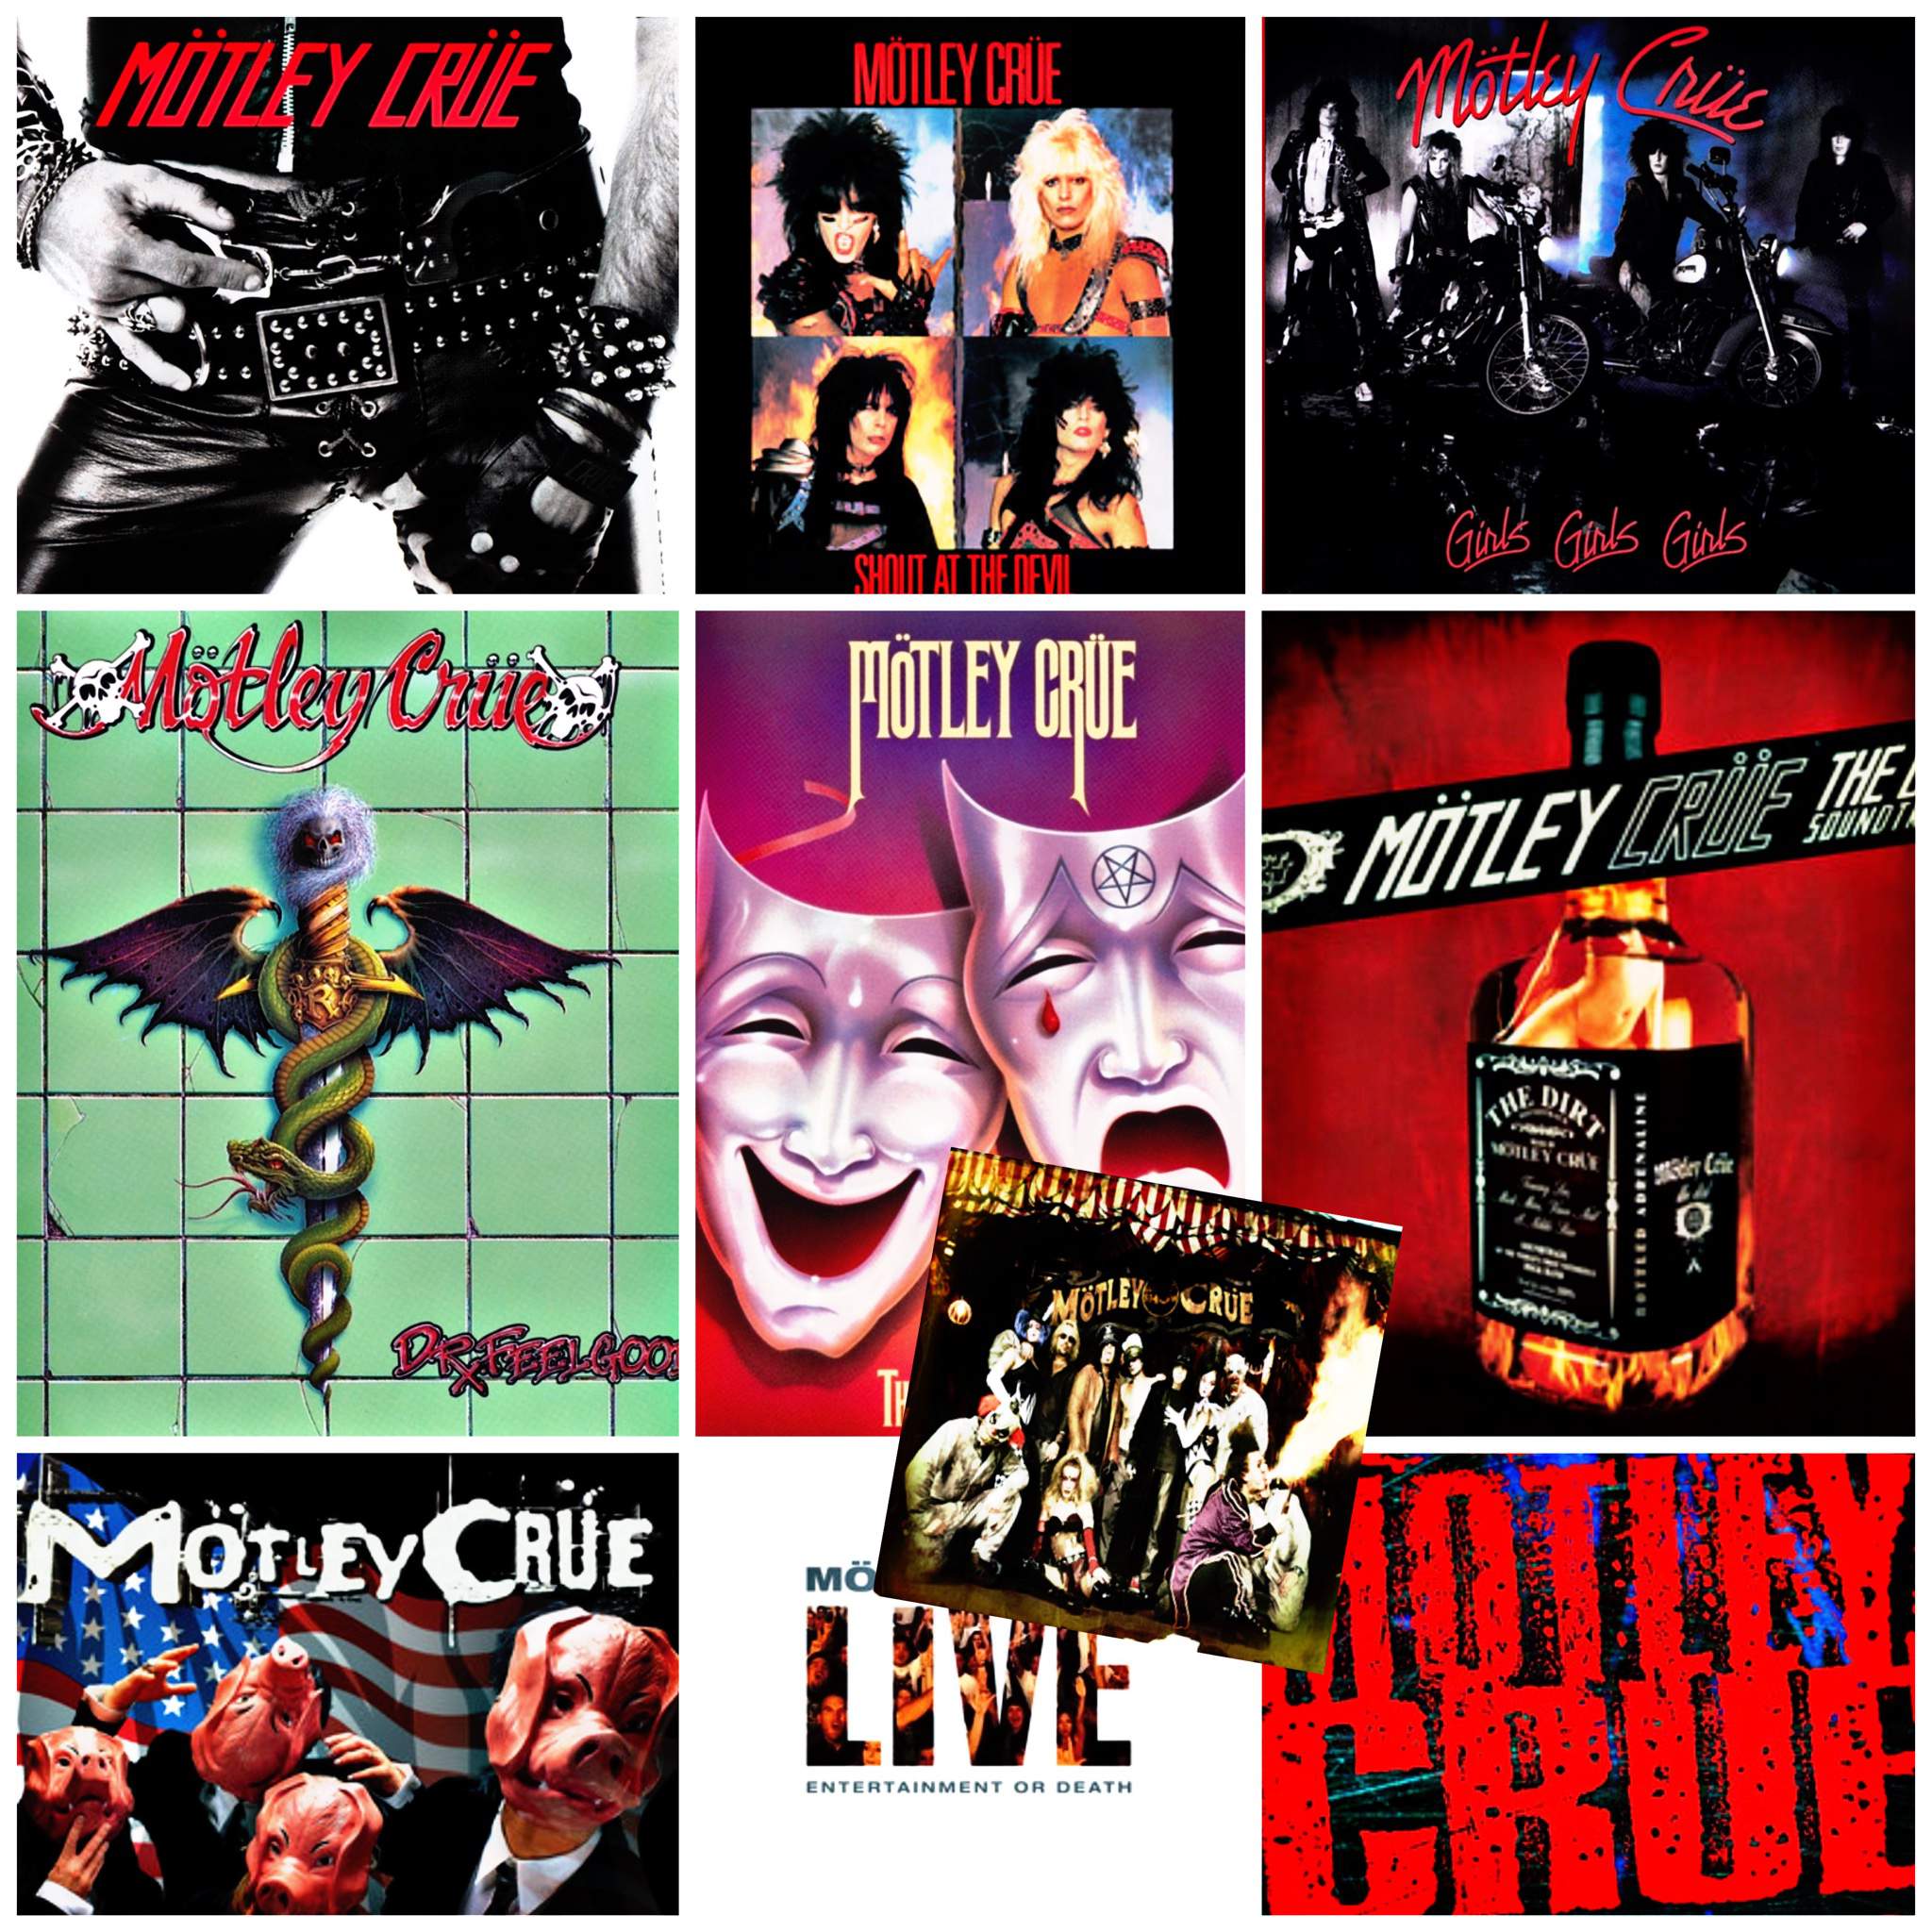 Mötley Crüe. TOP 3